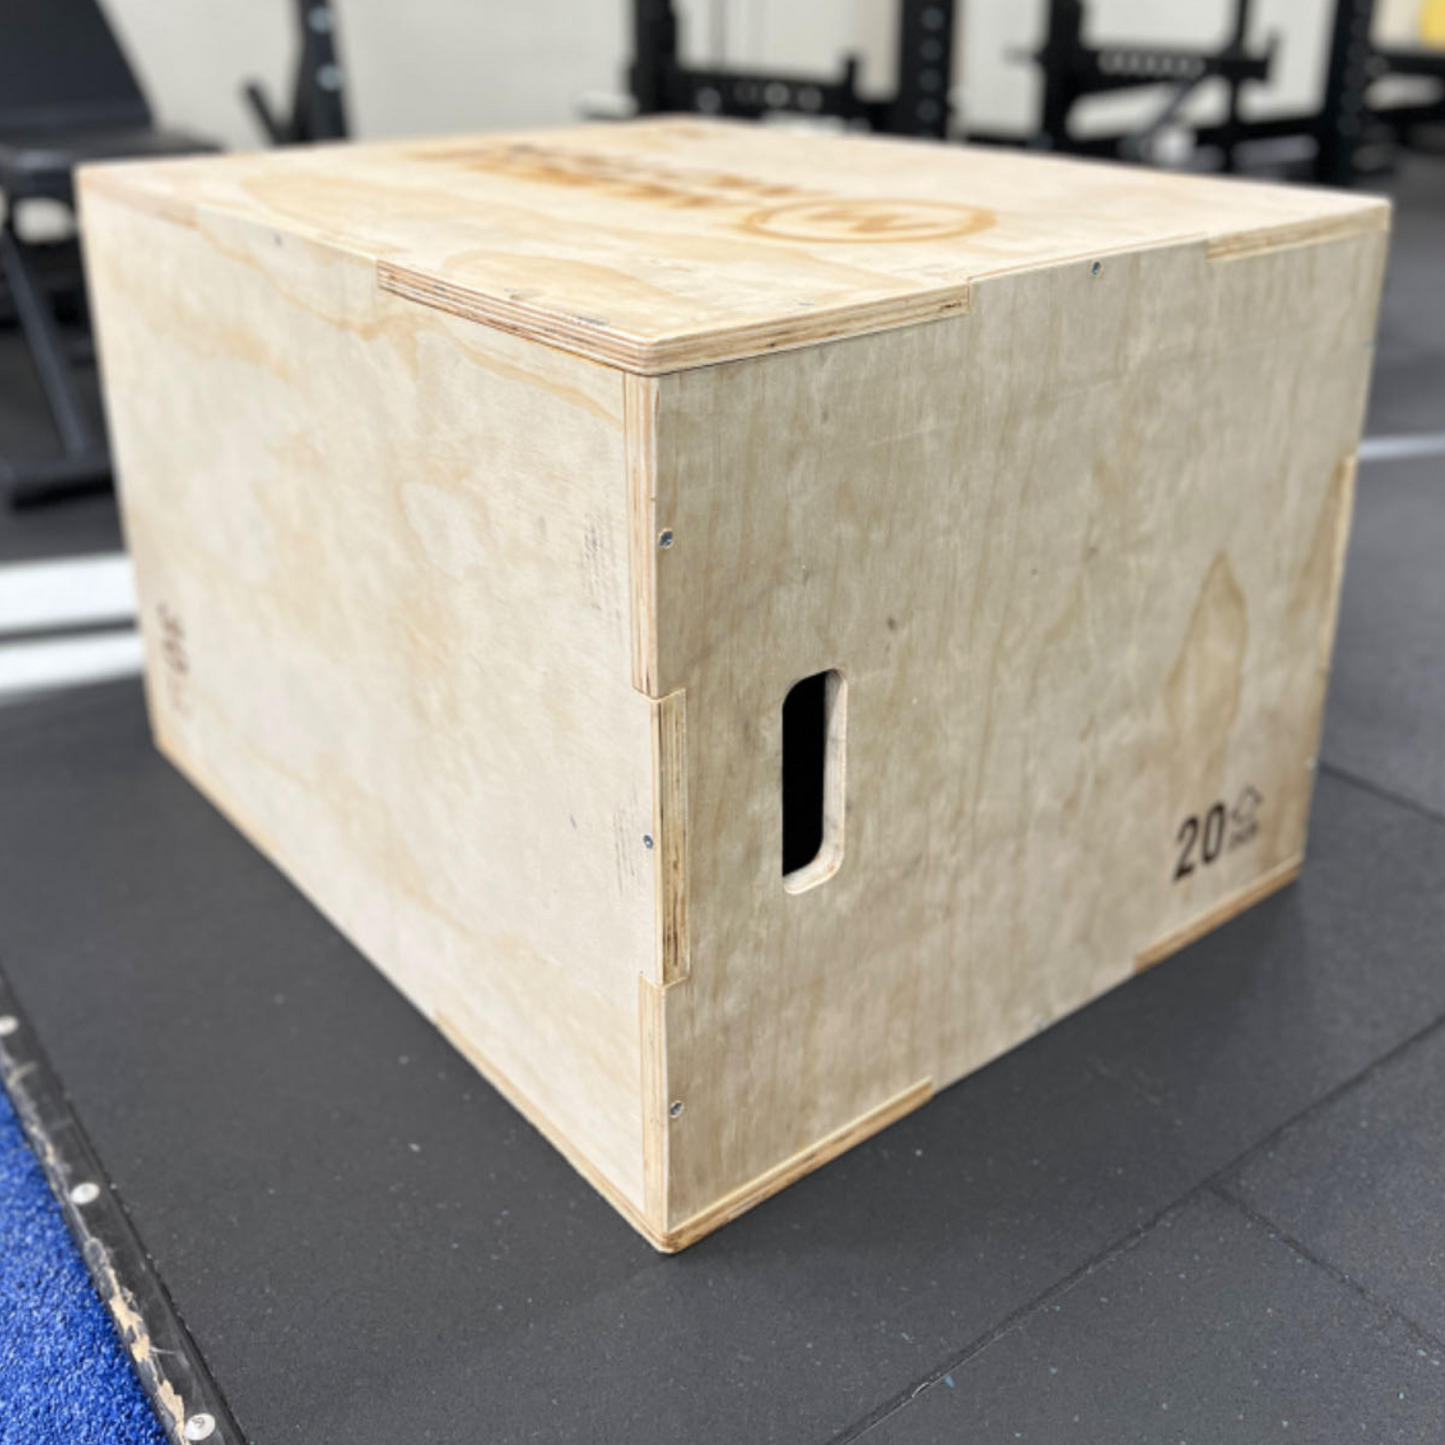 Muscle Motion 3 in 1 Wooden Plyometric Box